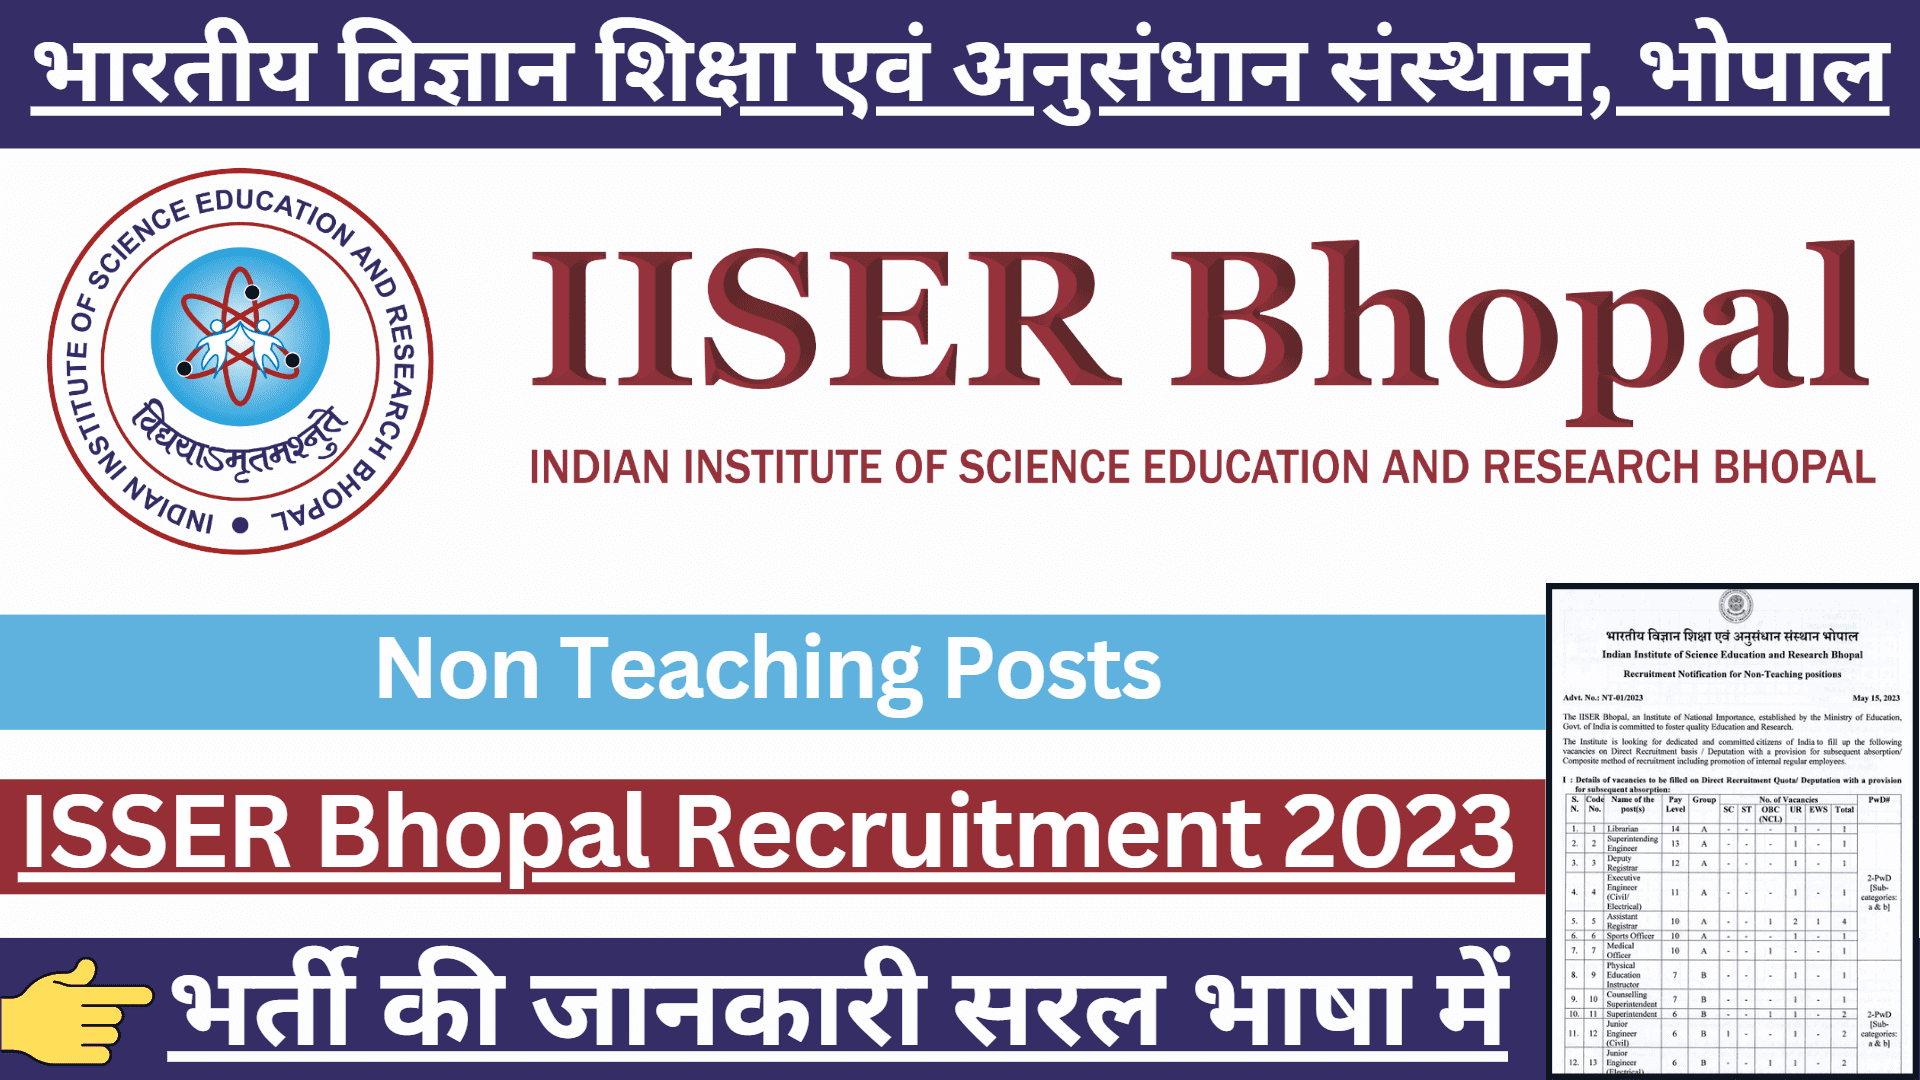 IISER Bhopal Non Teaching Recruitment 2023